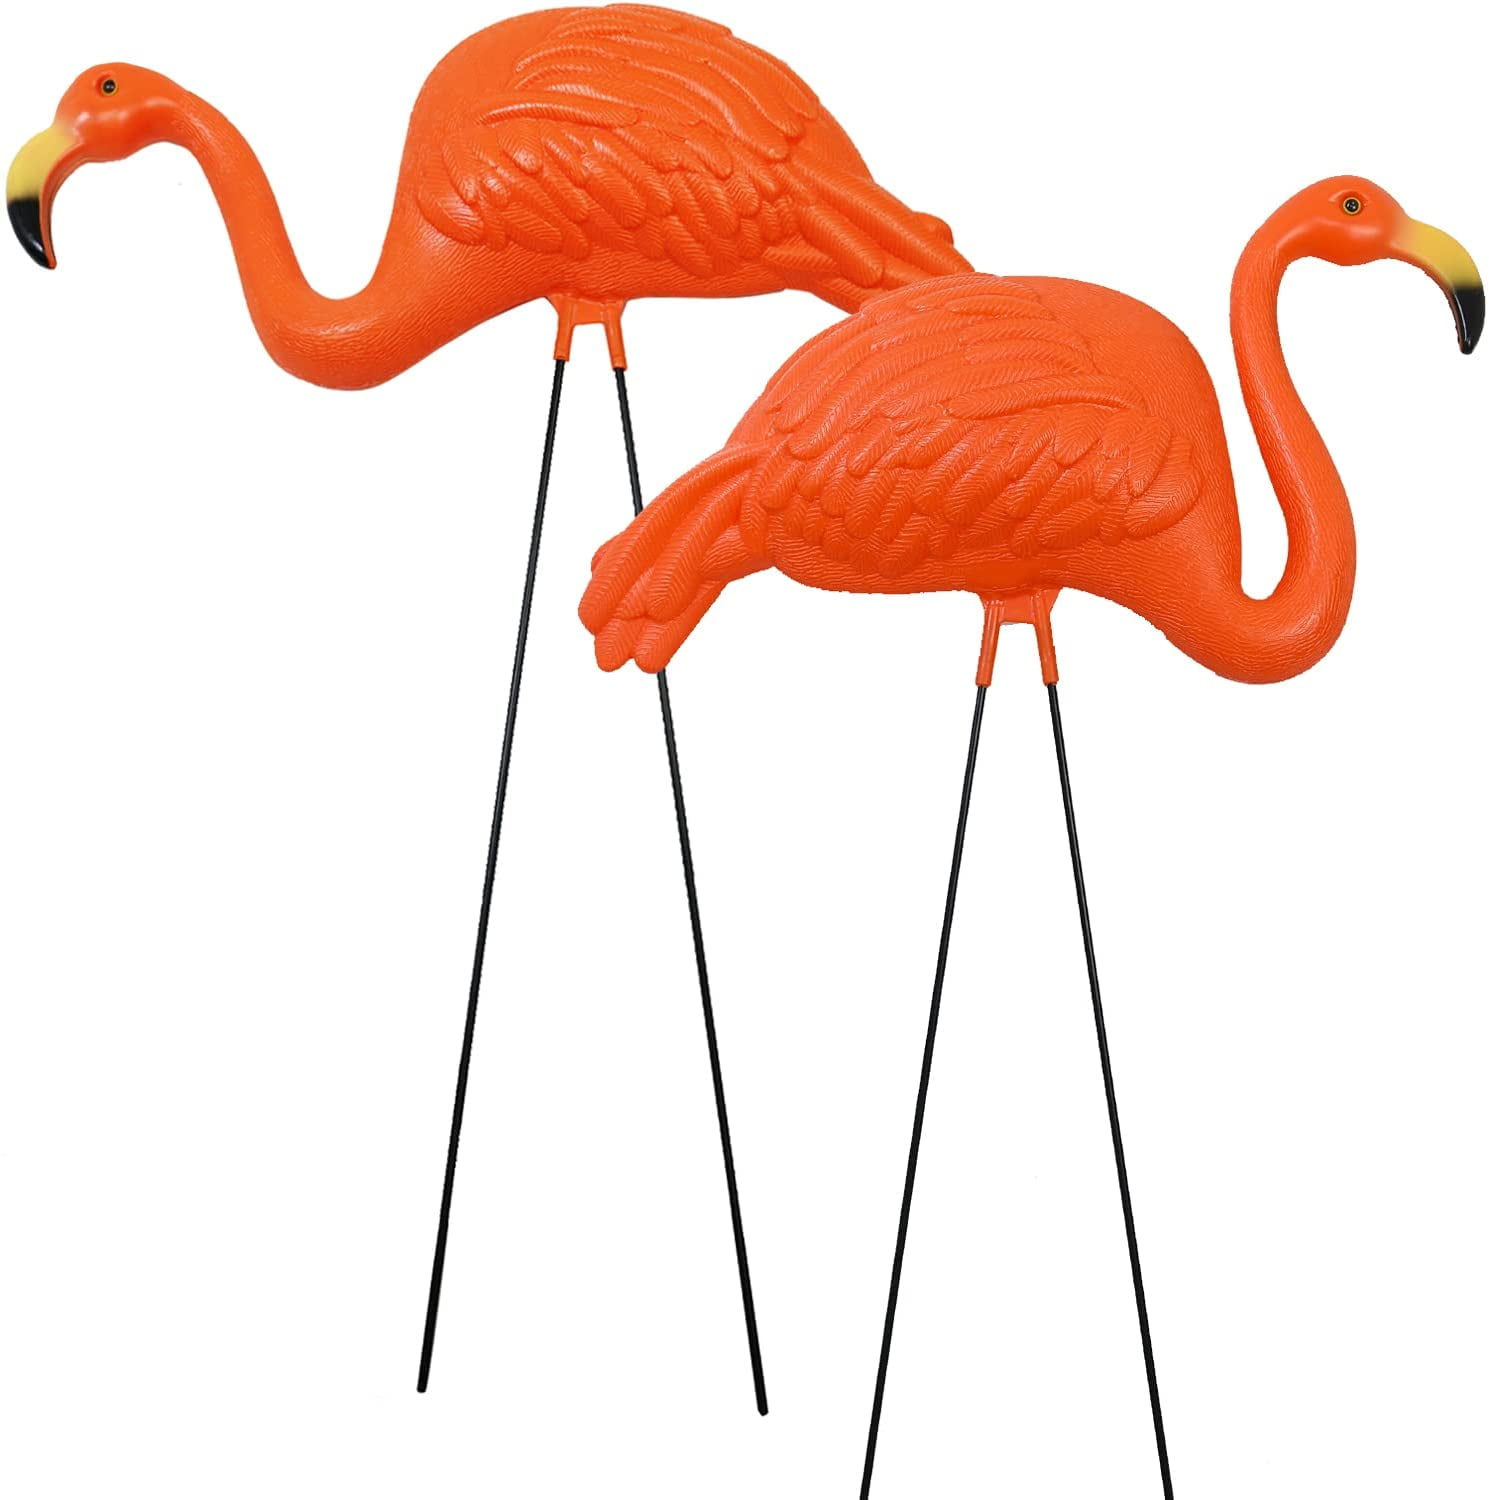 The Ribbon People Red Flamingo Pom-Poms Craft Trim .875 x 22 Yards